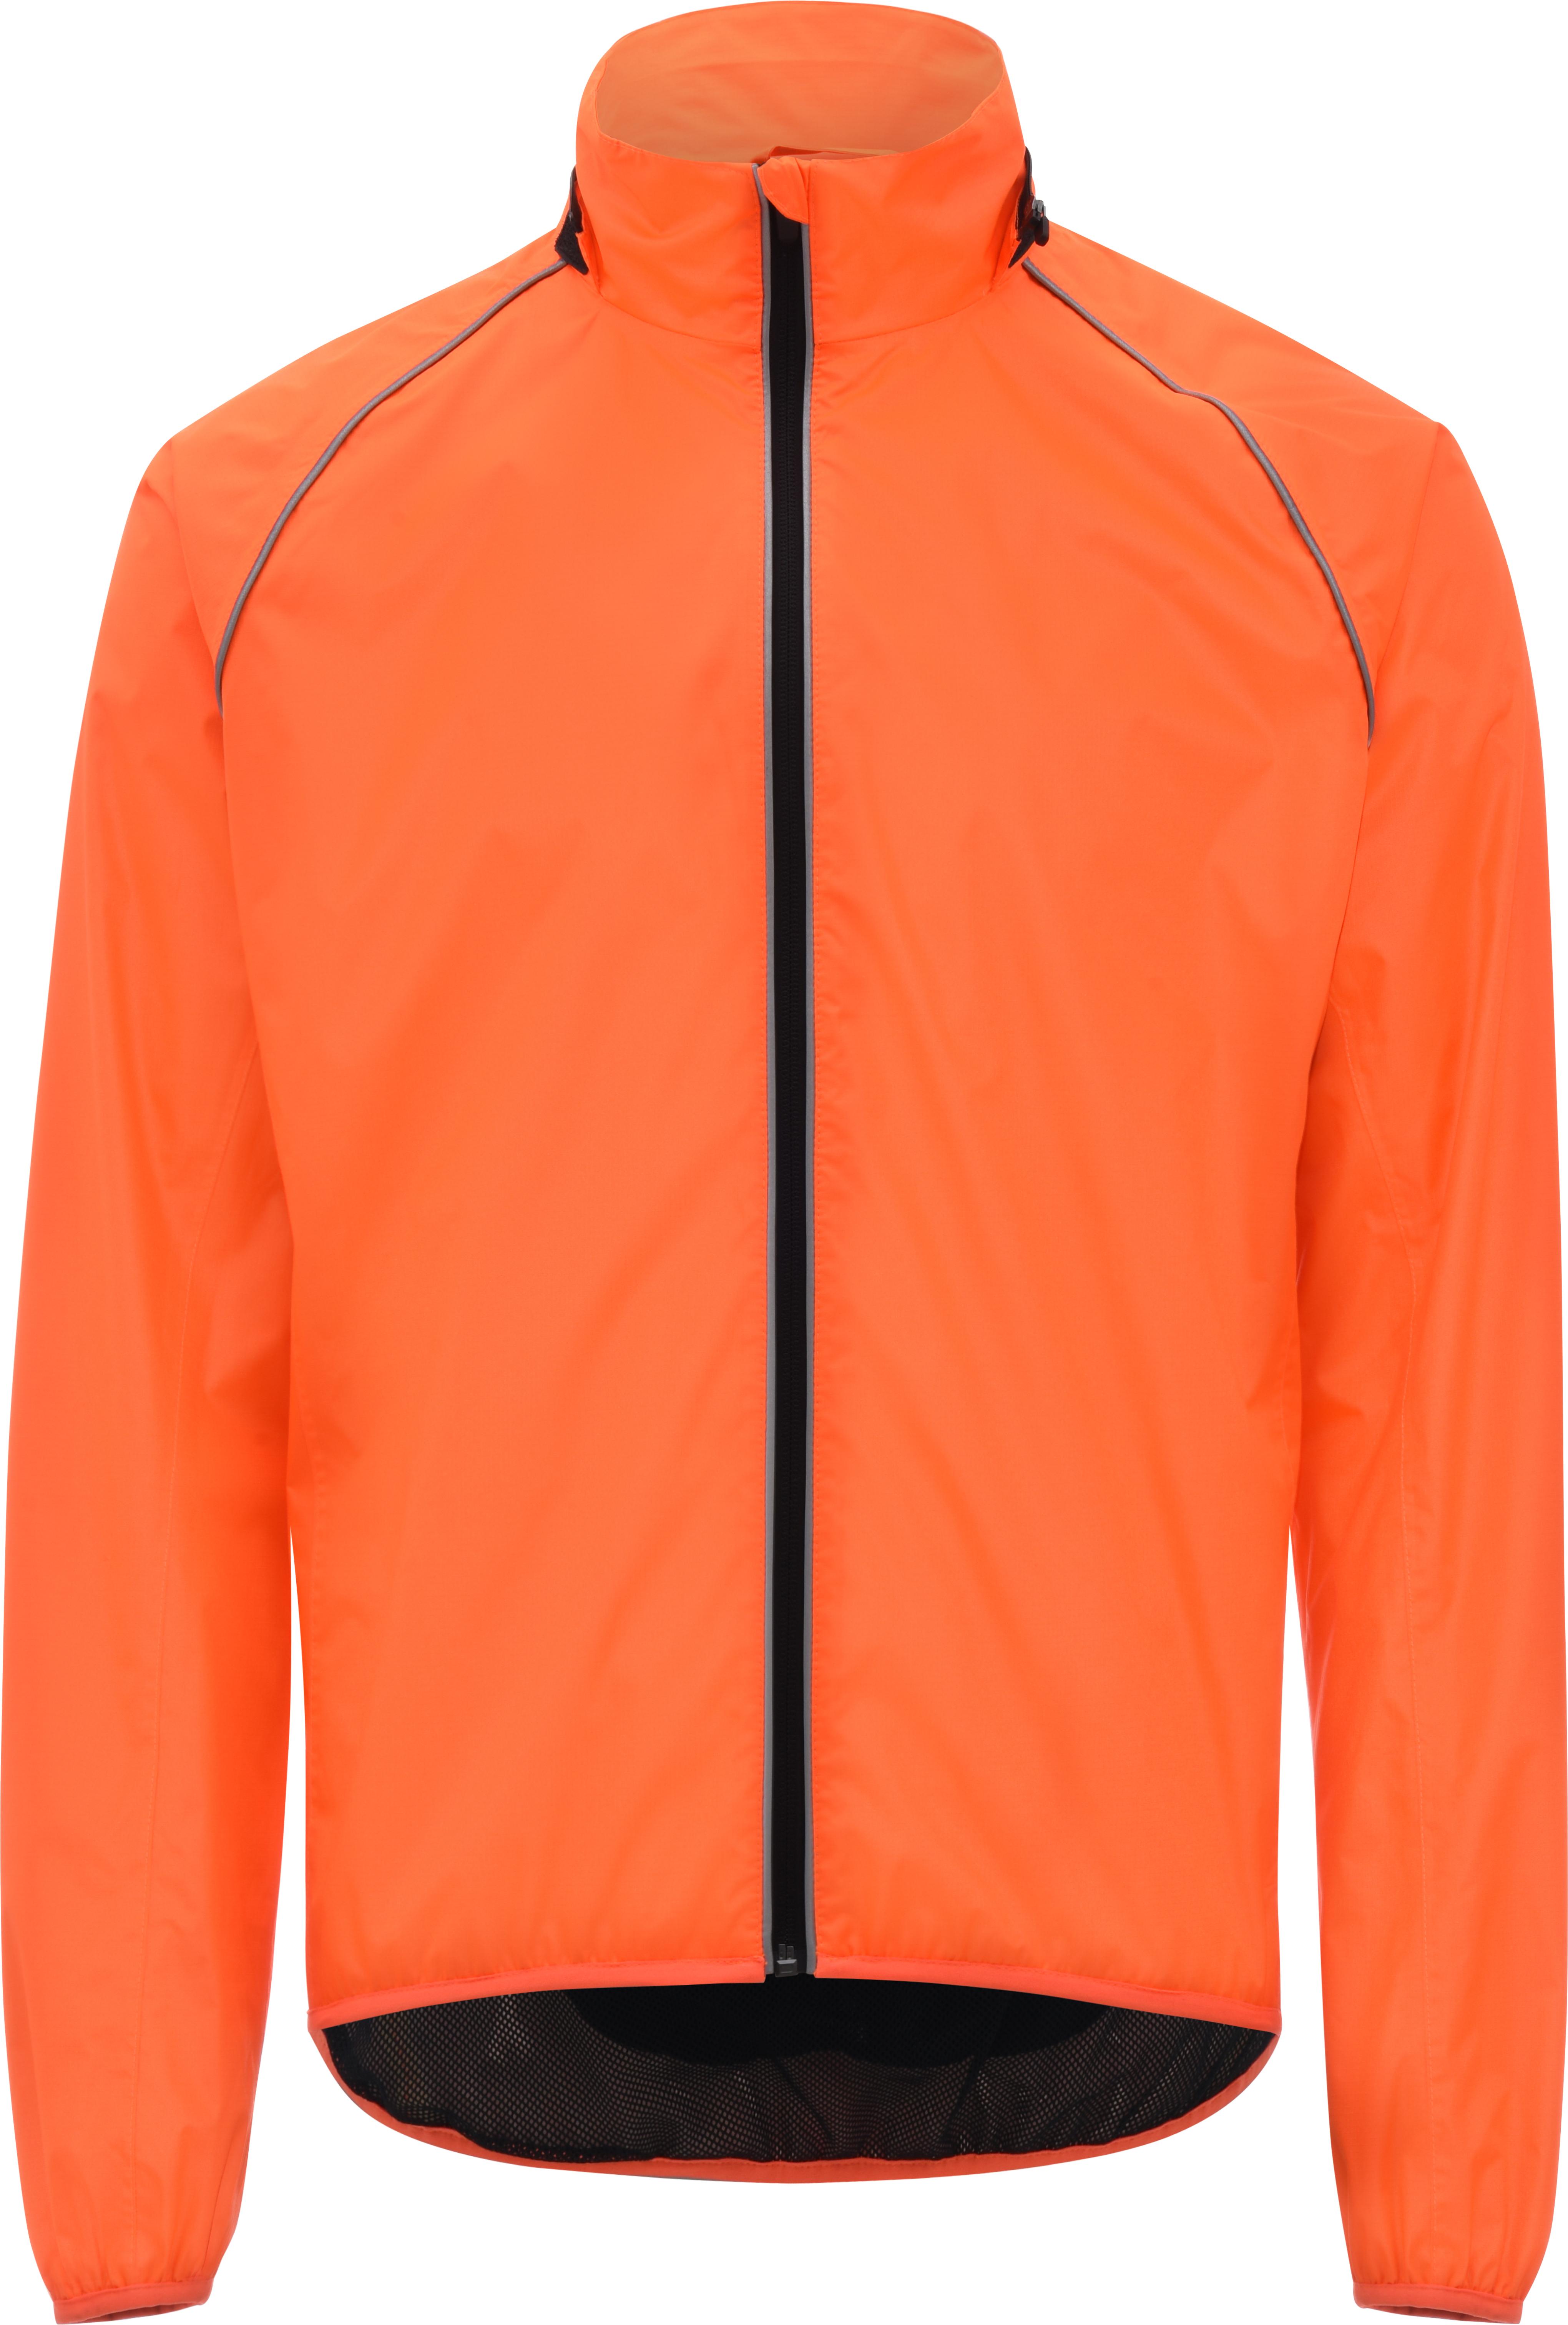 Halfords Ridge Unisex Waterproof Jacket - Fluorescent Orange, Xl